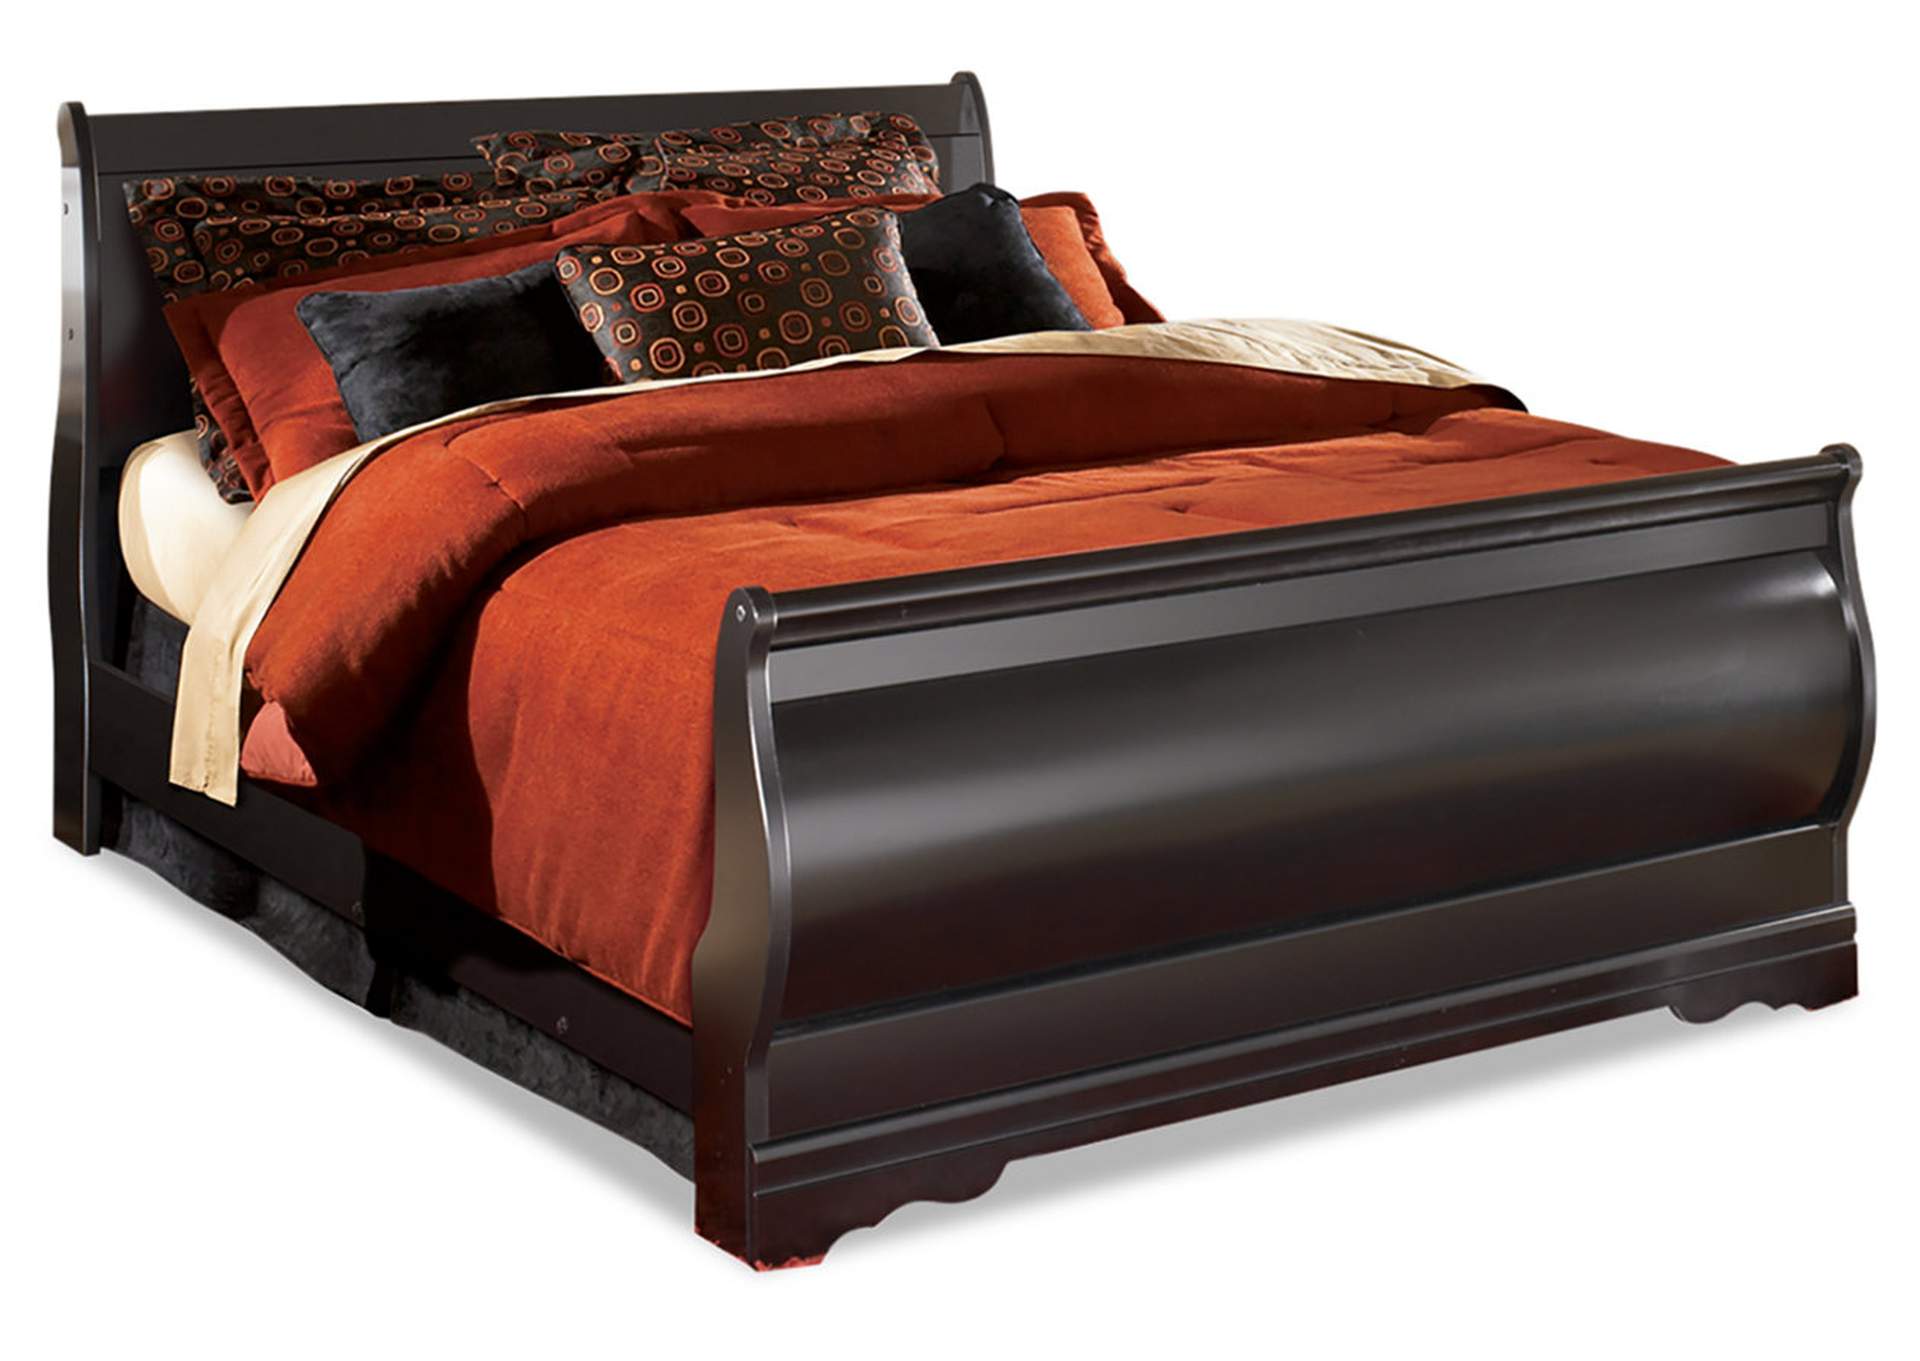 Huey Vineyard Queen Sleigh Headboard Bed with Dresser,Signature Design By Ashley